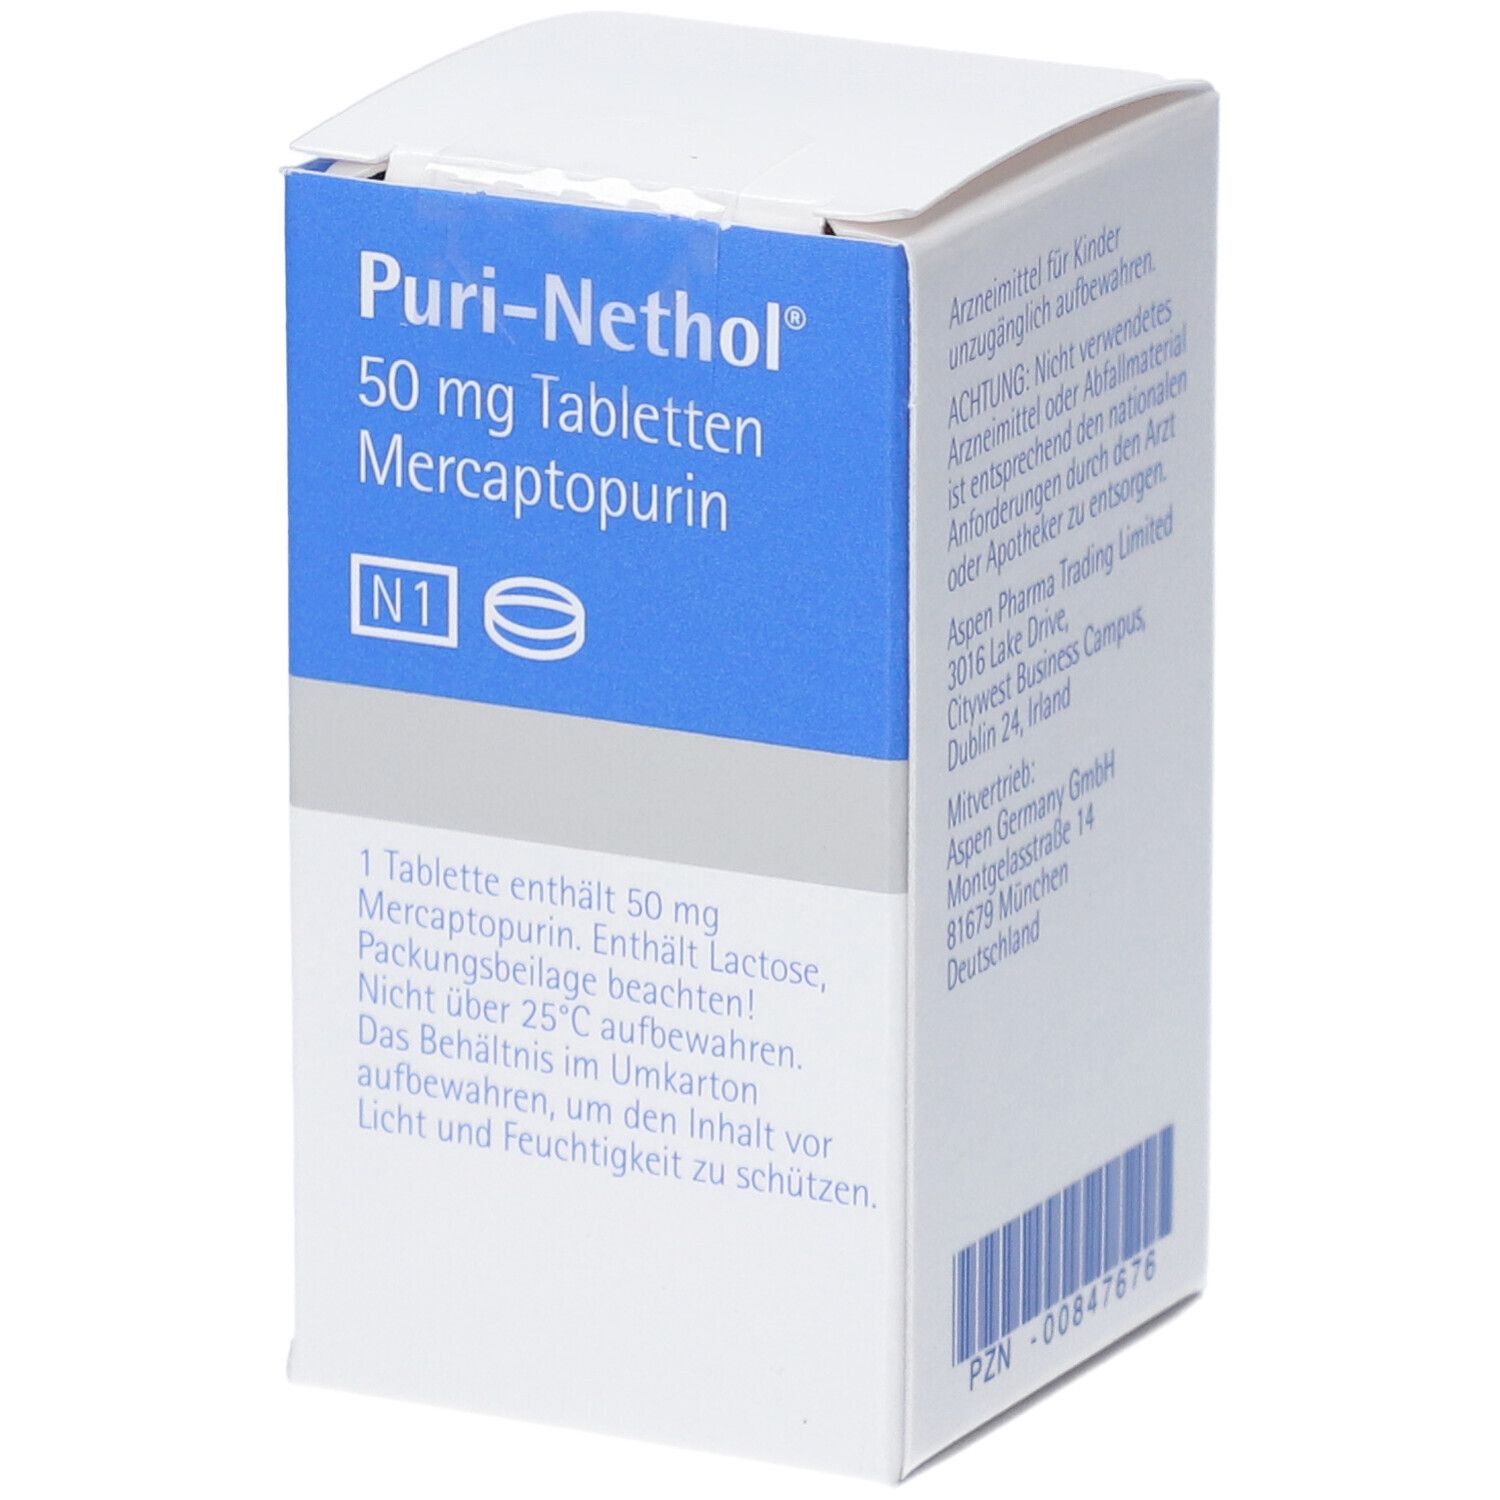 Puri-Nethol® 50 mg